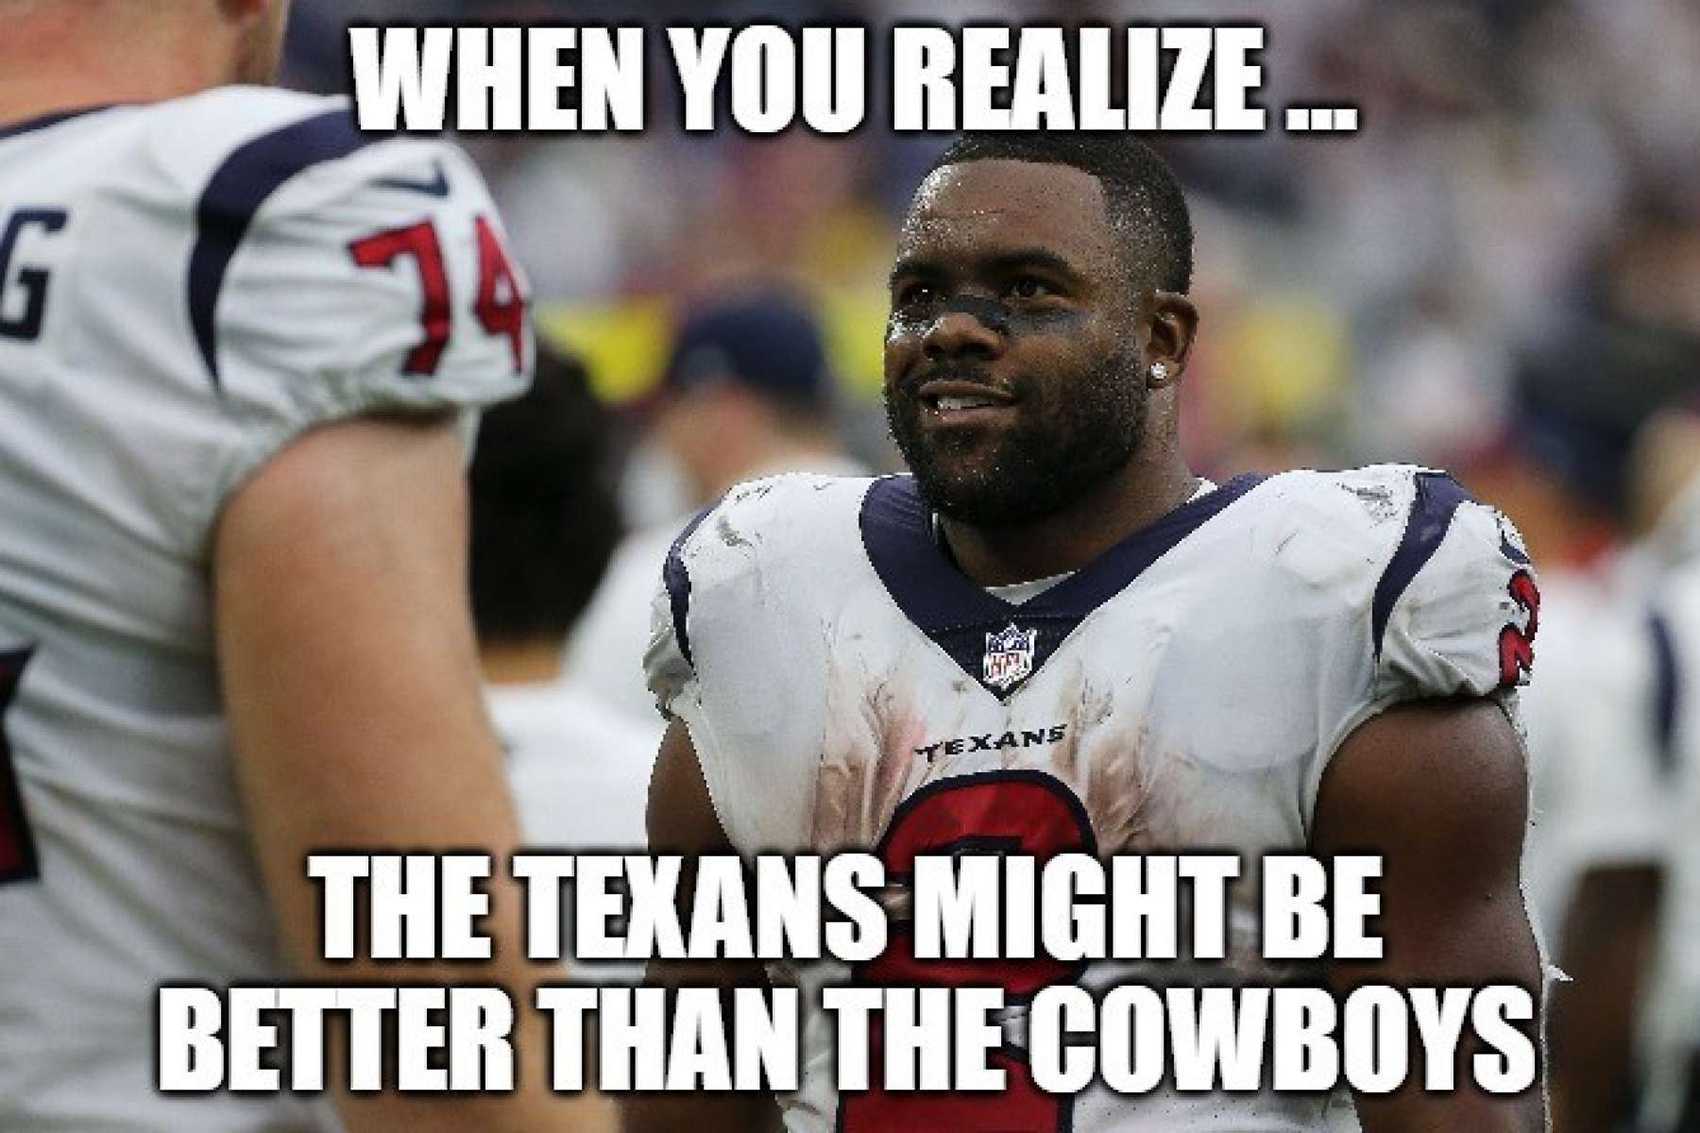 Cowboys Beat Eagles Meme - IdleMeme